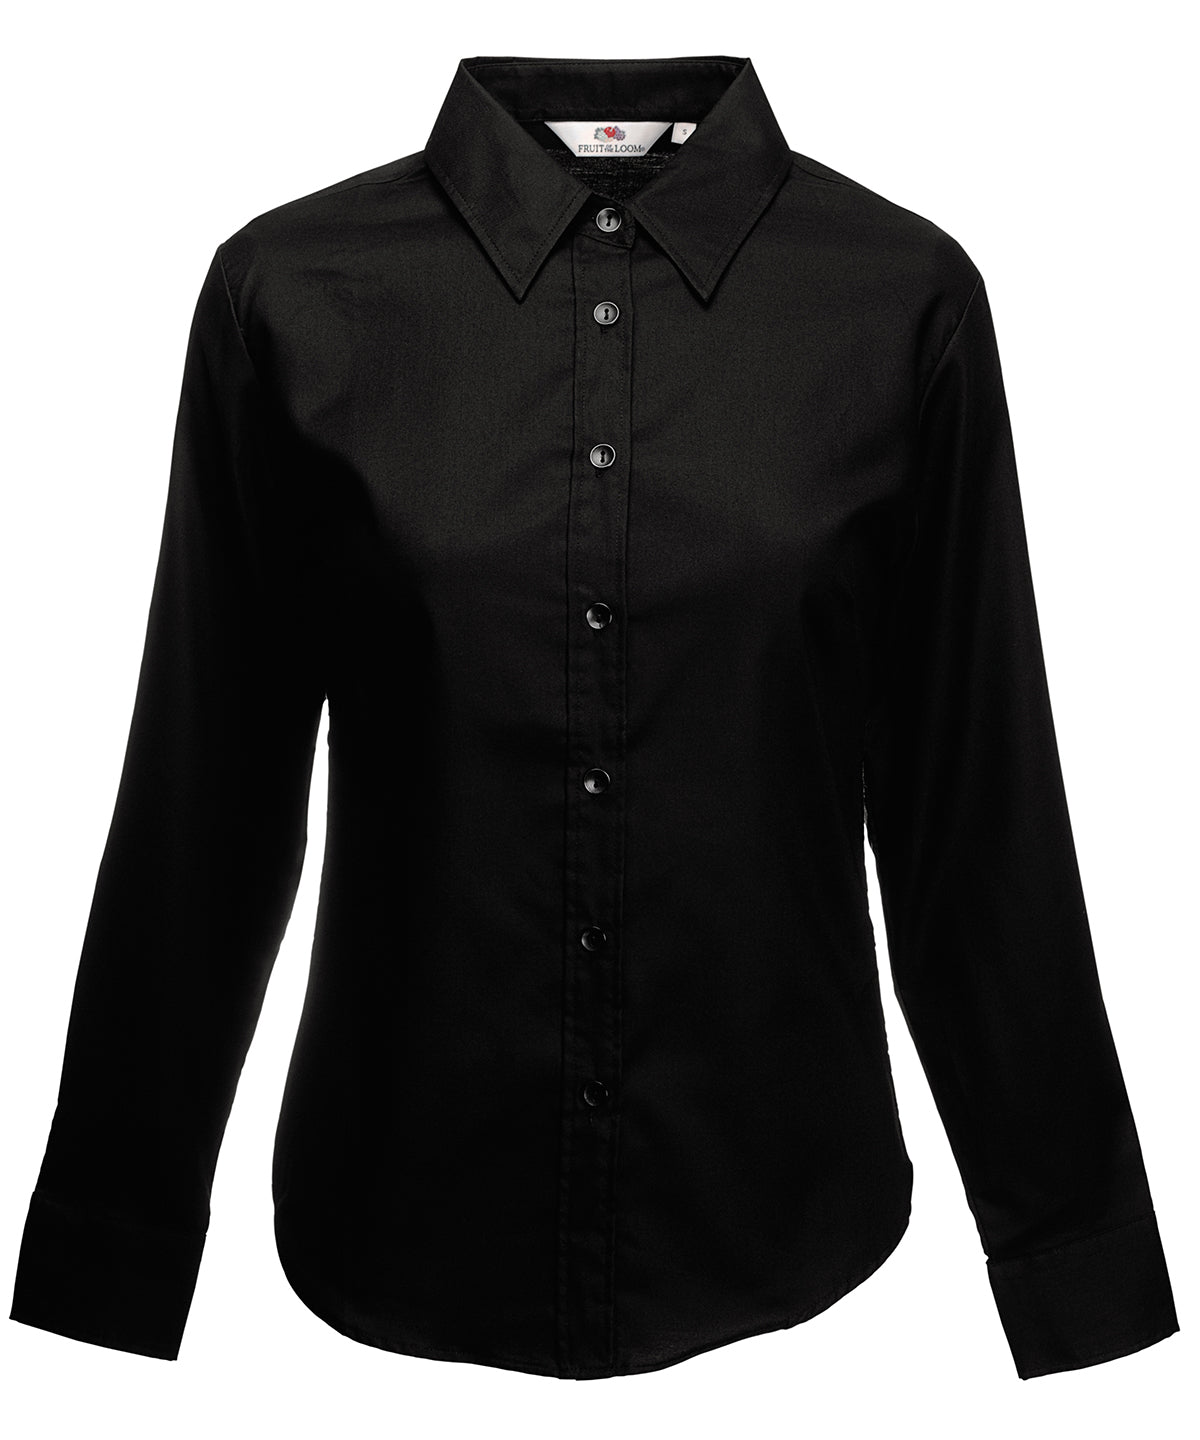 Bolir - Women's Oxford Long Sleeve Shirt